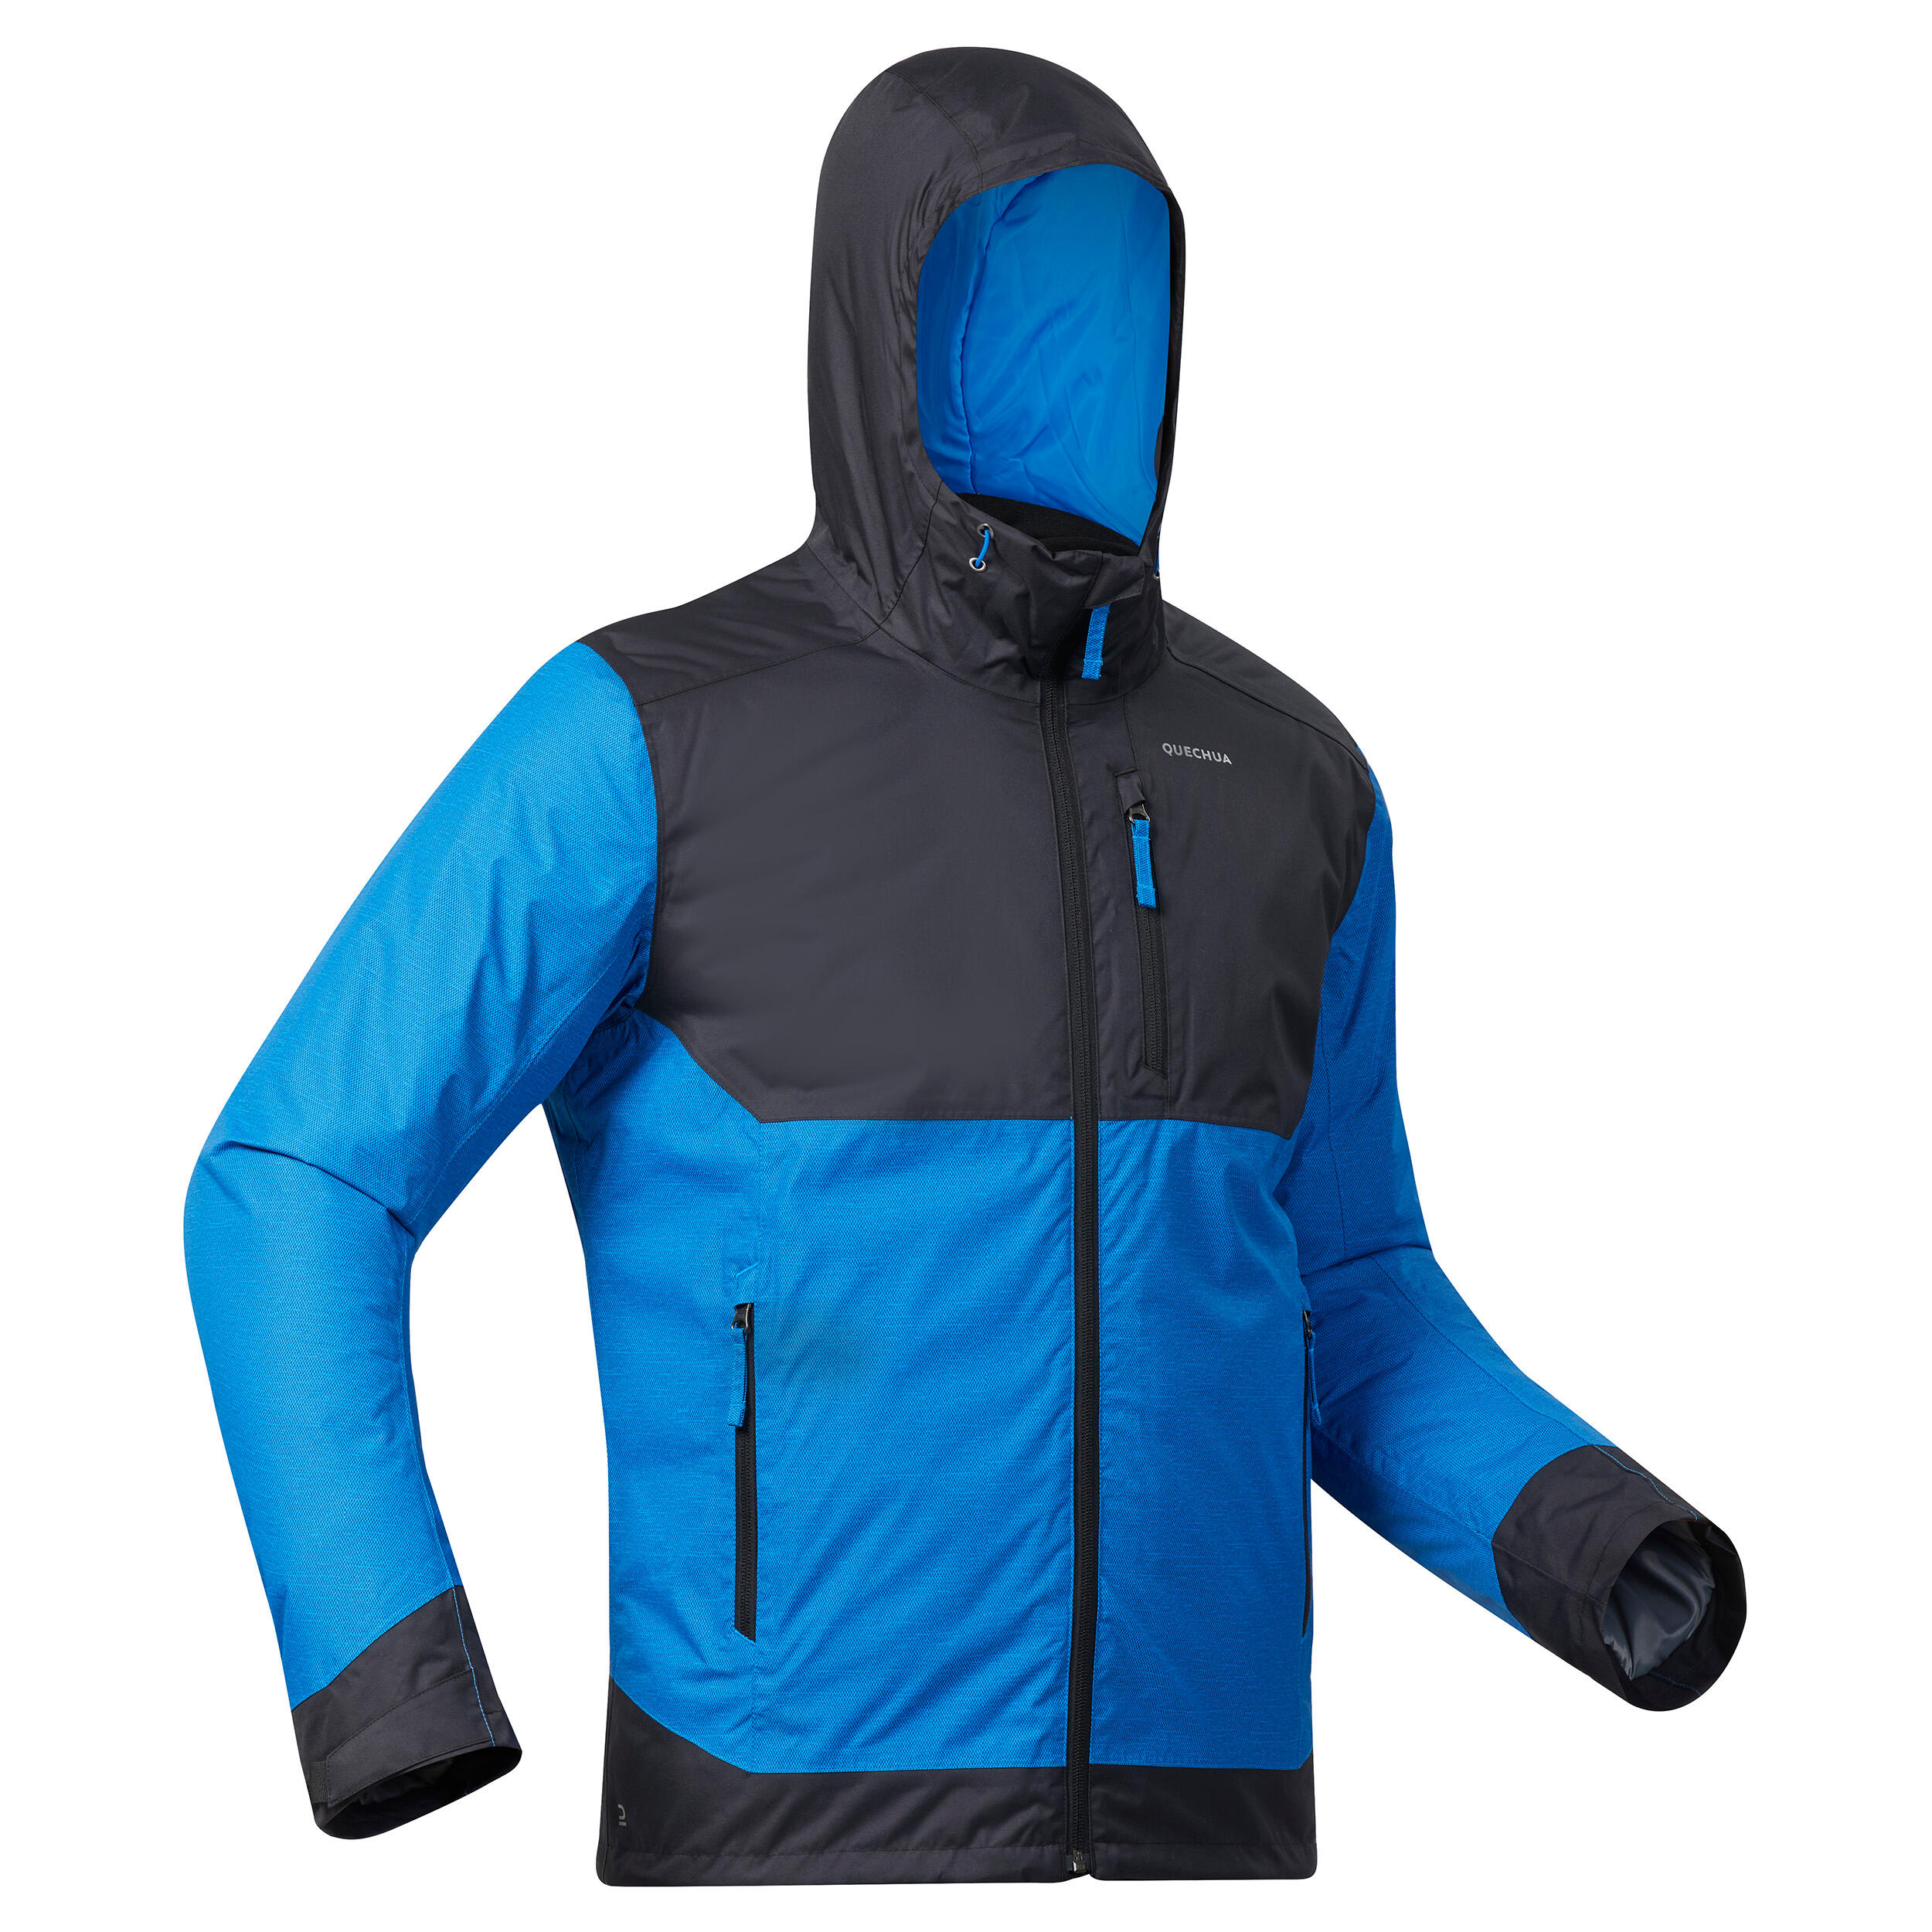 Men’s hiking waterproof winter jacket - SH500 -10°C 2/9